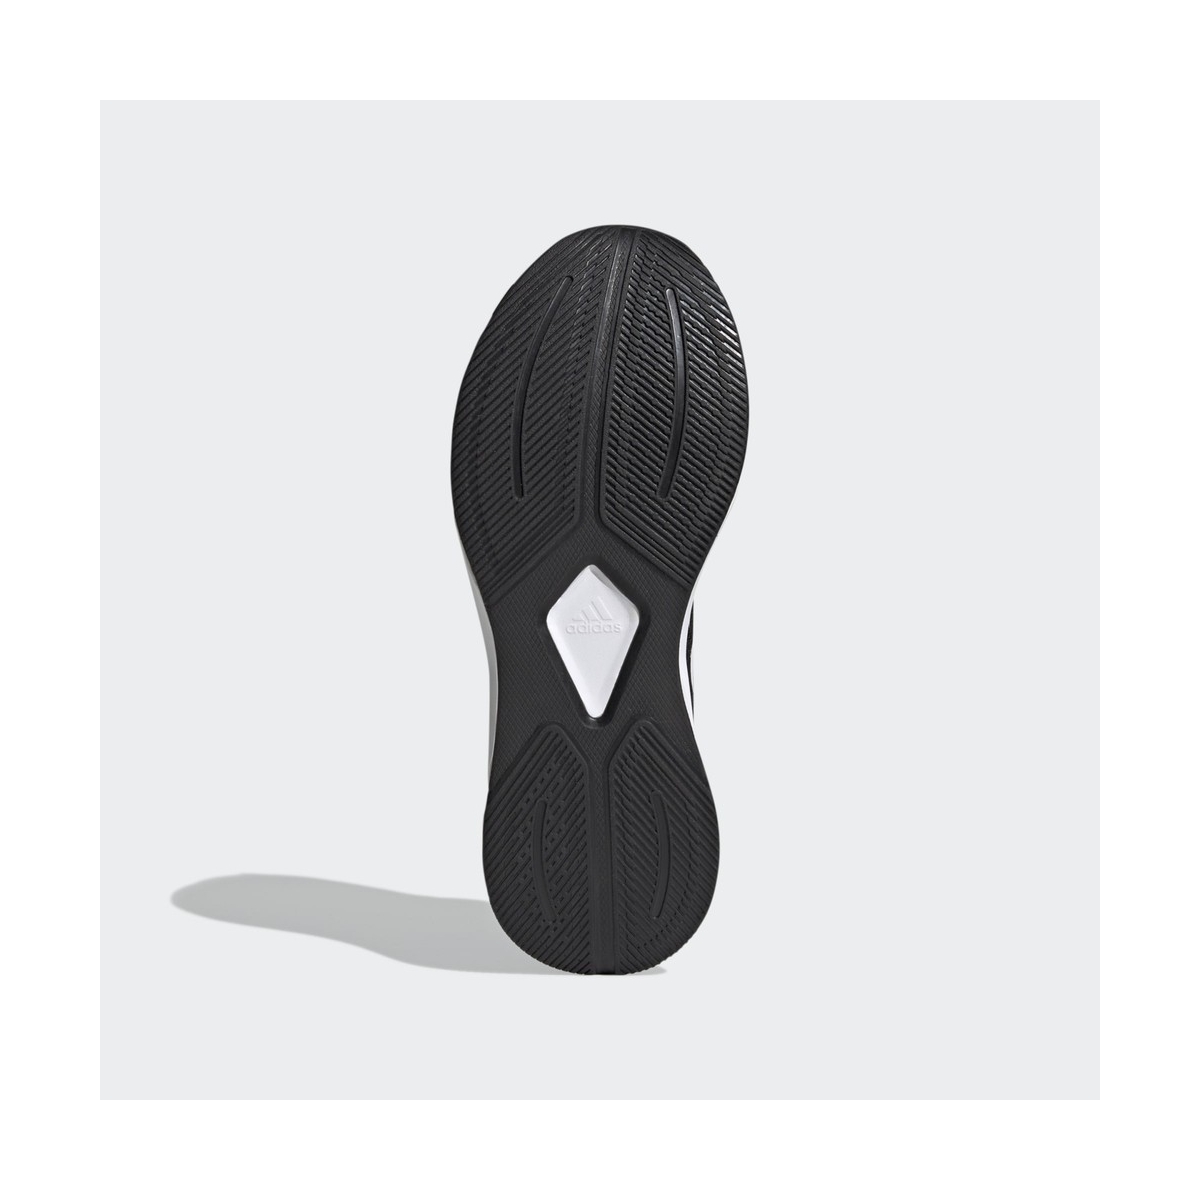 adidas Duramo SL 2.0 Siyah Koşu Ayakkabısı (GW8336)